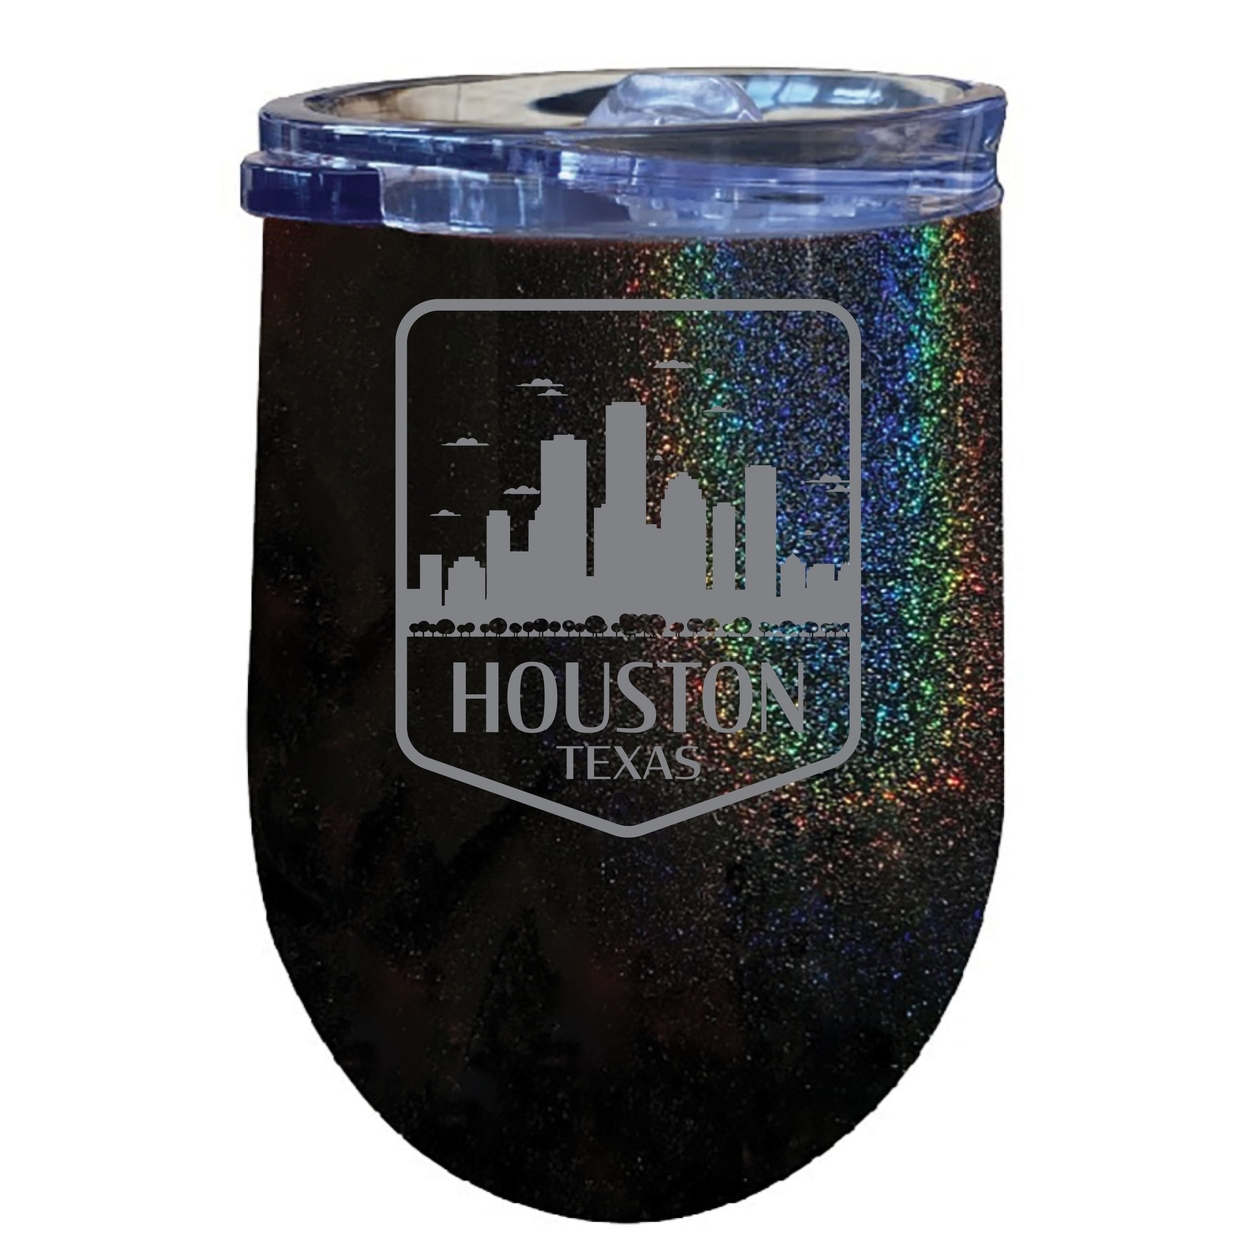 Houston Texas Souvenir 12 Oz Engraved Insulated Wine Stainless Steel Tumbler - Rainbow Glitter Gray,,4-Pack